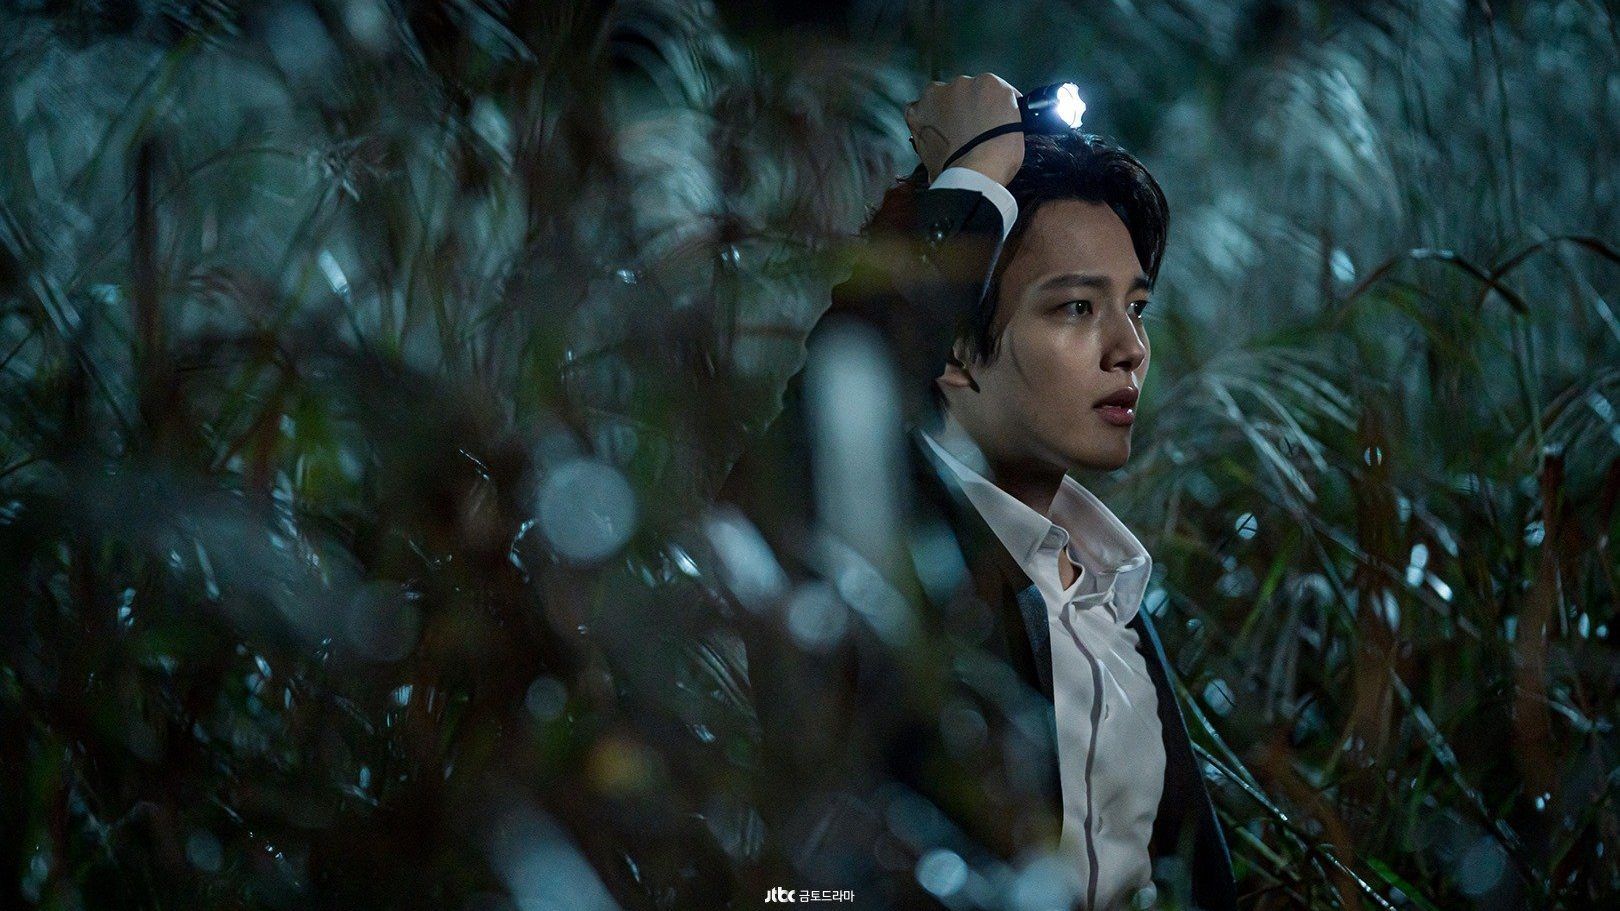 Kdrama Beyond Evil review starring shin ha kyun, yeo jin goo - kdramaomo.com 